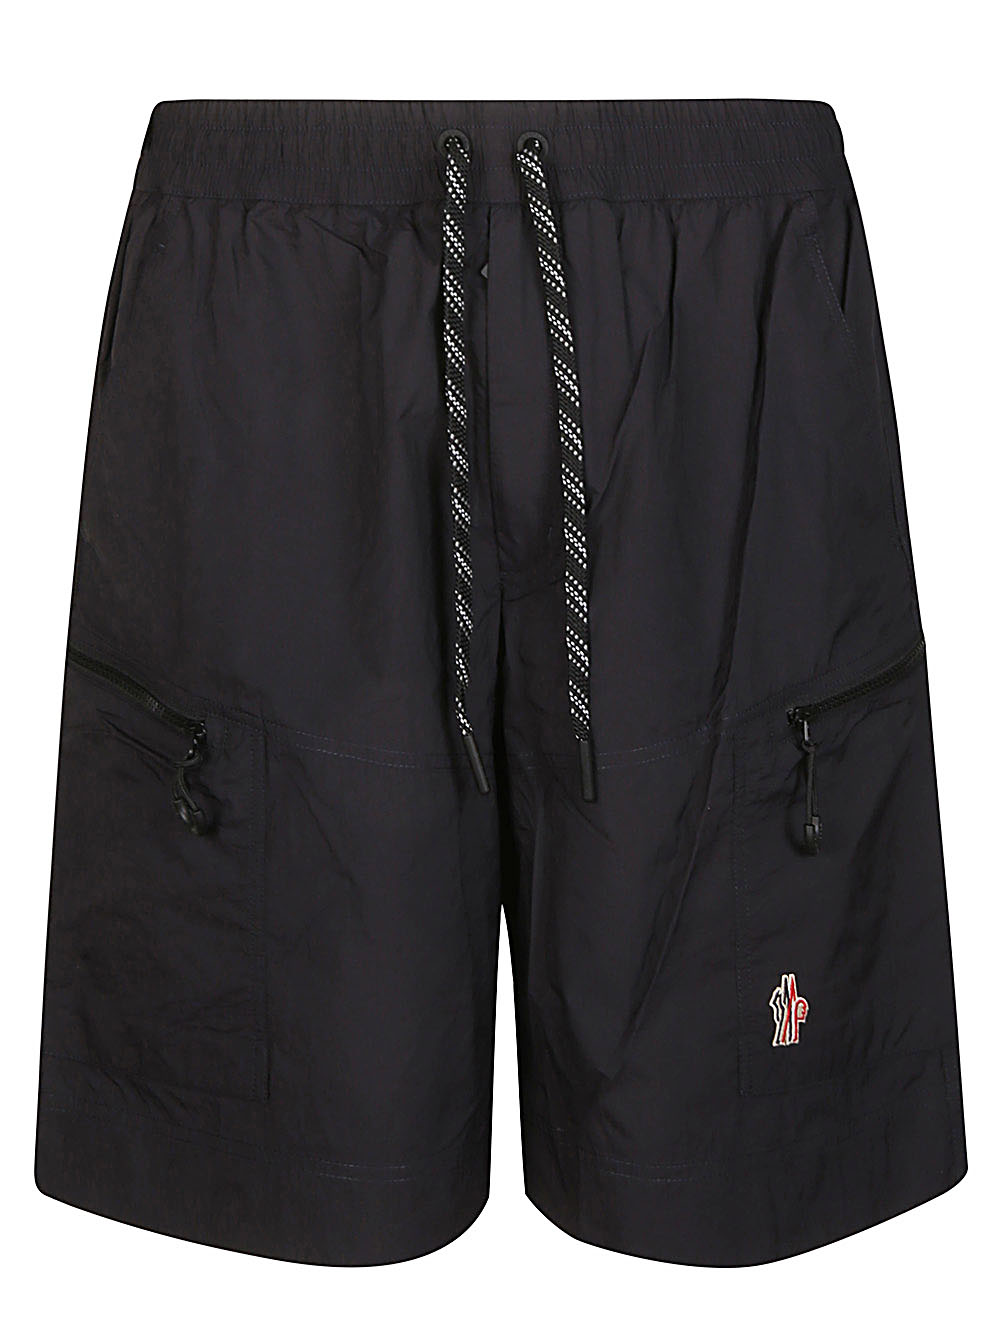 Moncler Grenoble MONCLER GRENOBLE- Bermuda Shorts With Pockets